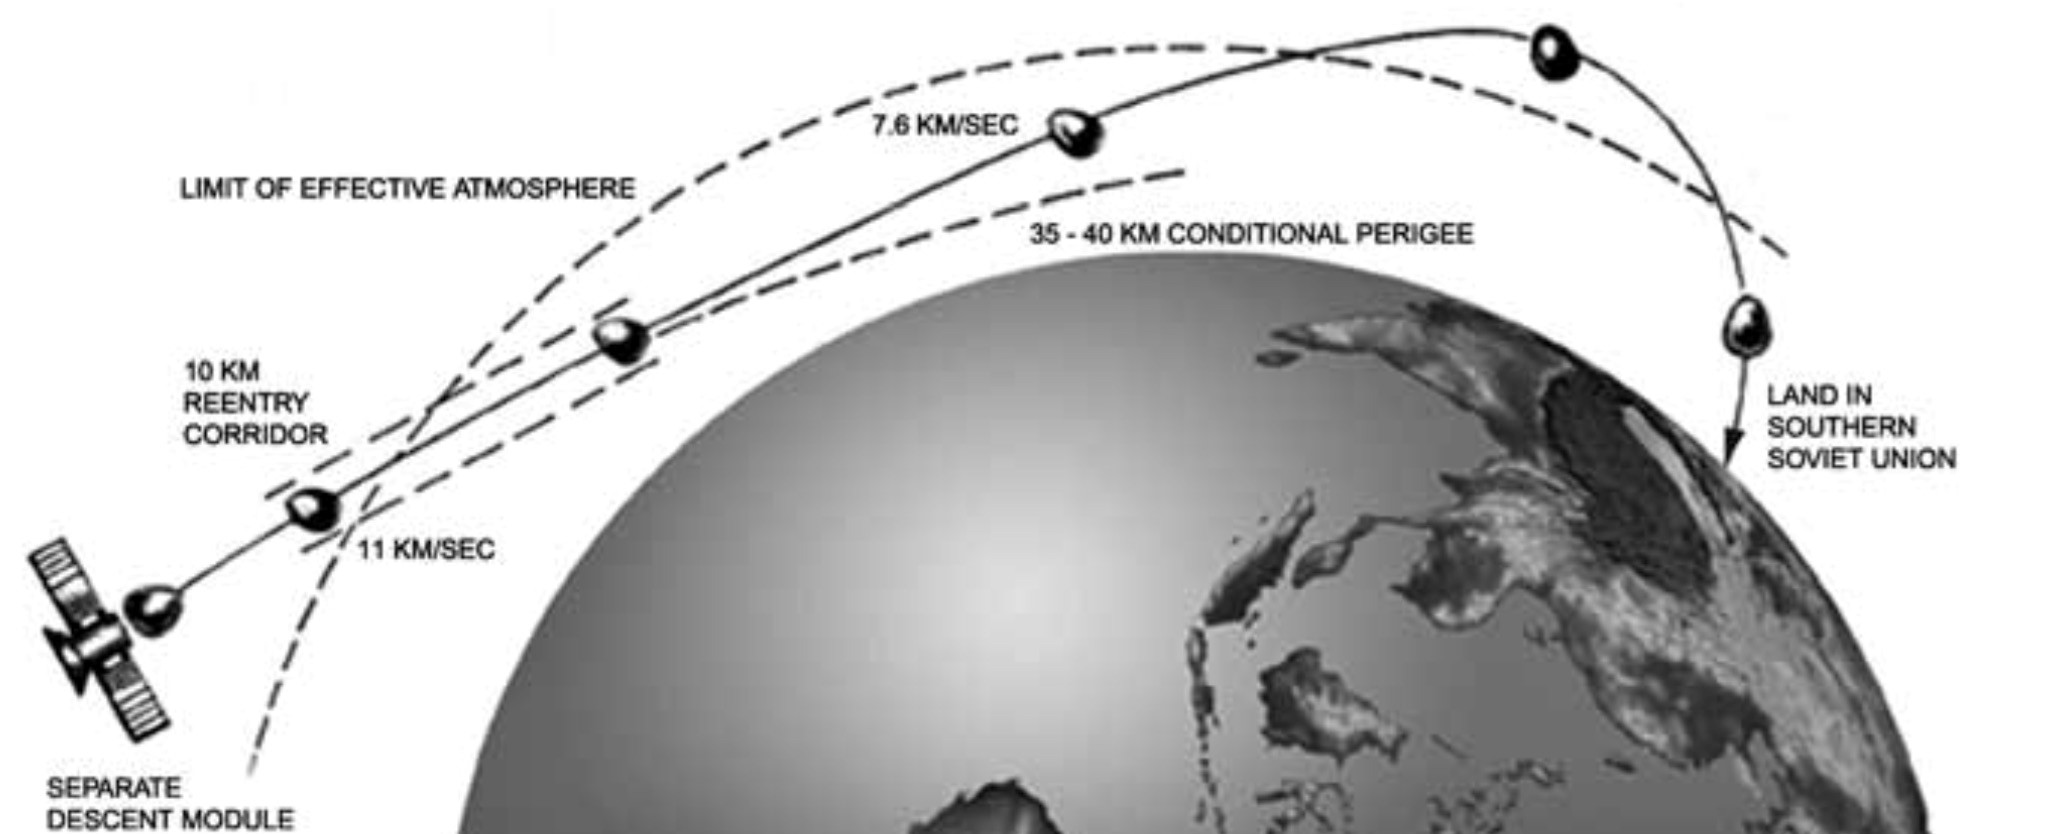 Depiction of Zond 6’s skip reentry trajectory flown